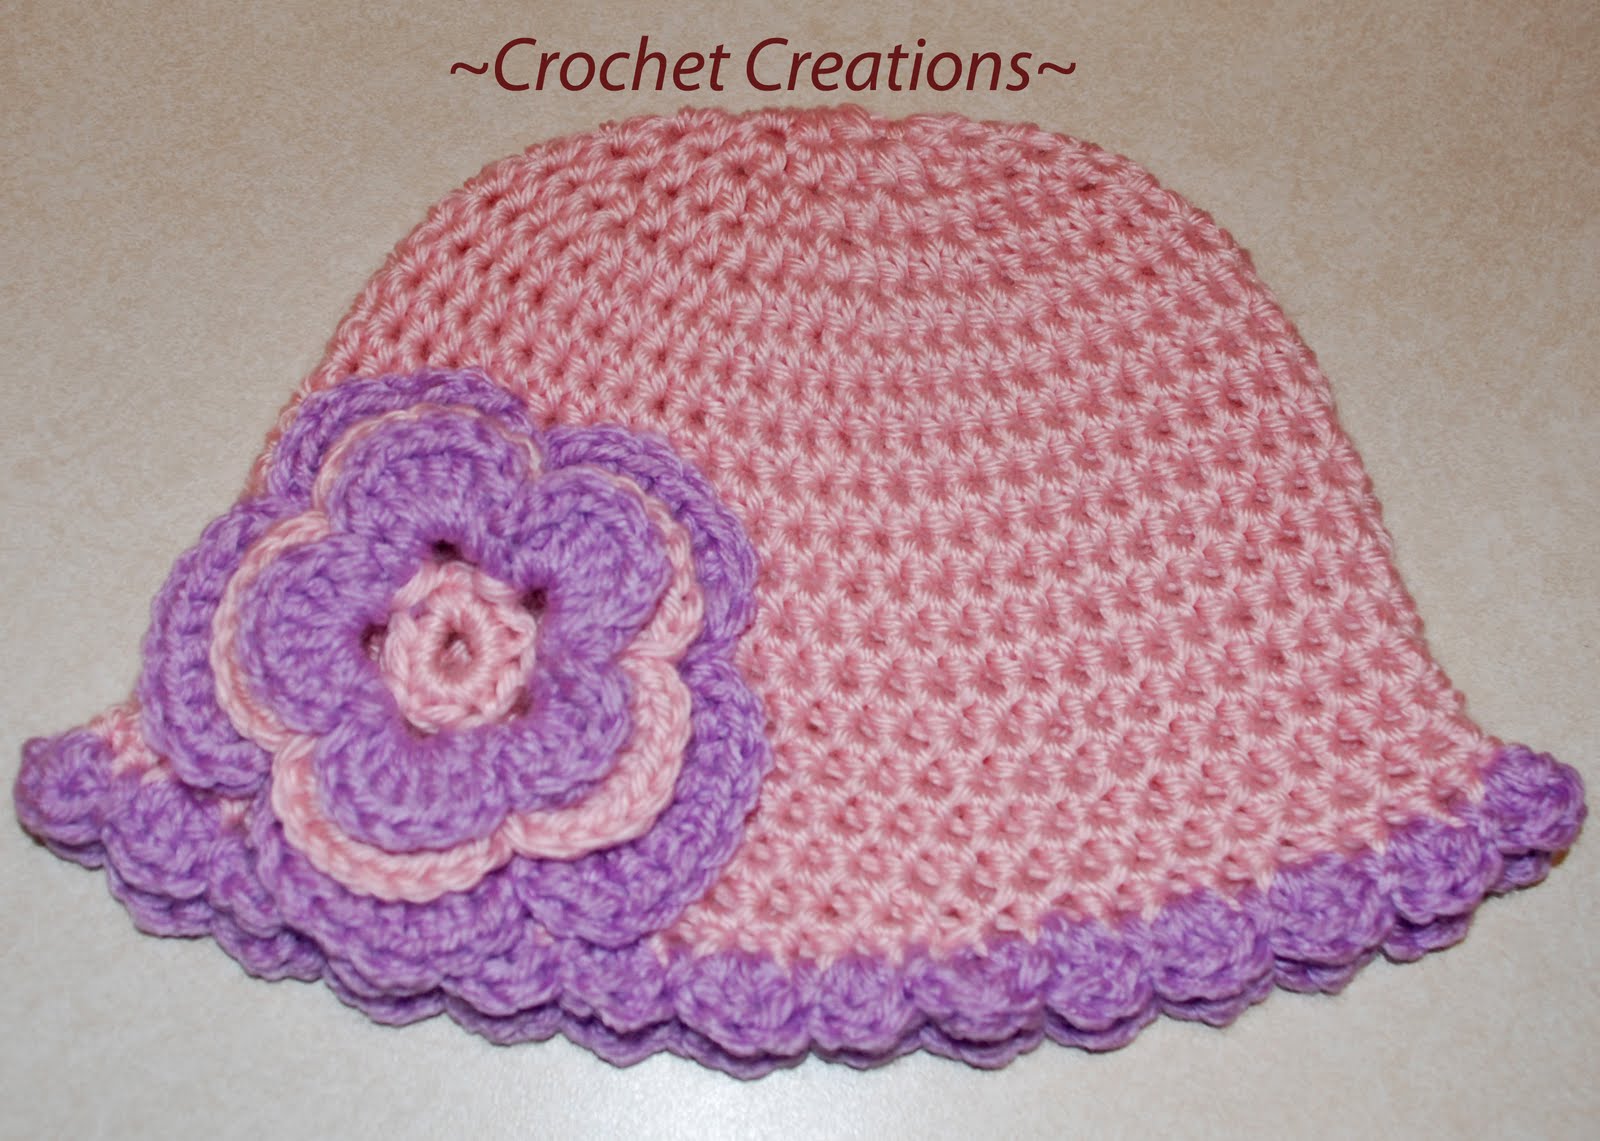 Amazon.com: baby crochet hat pattern: Books